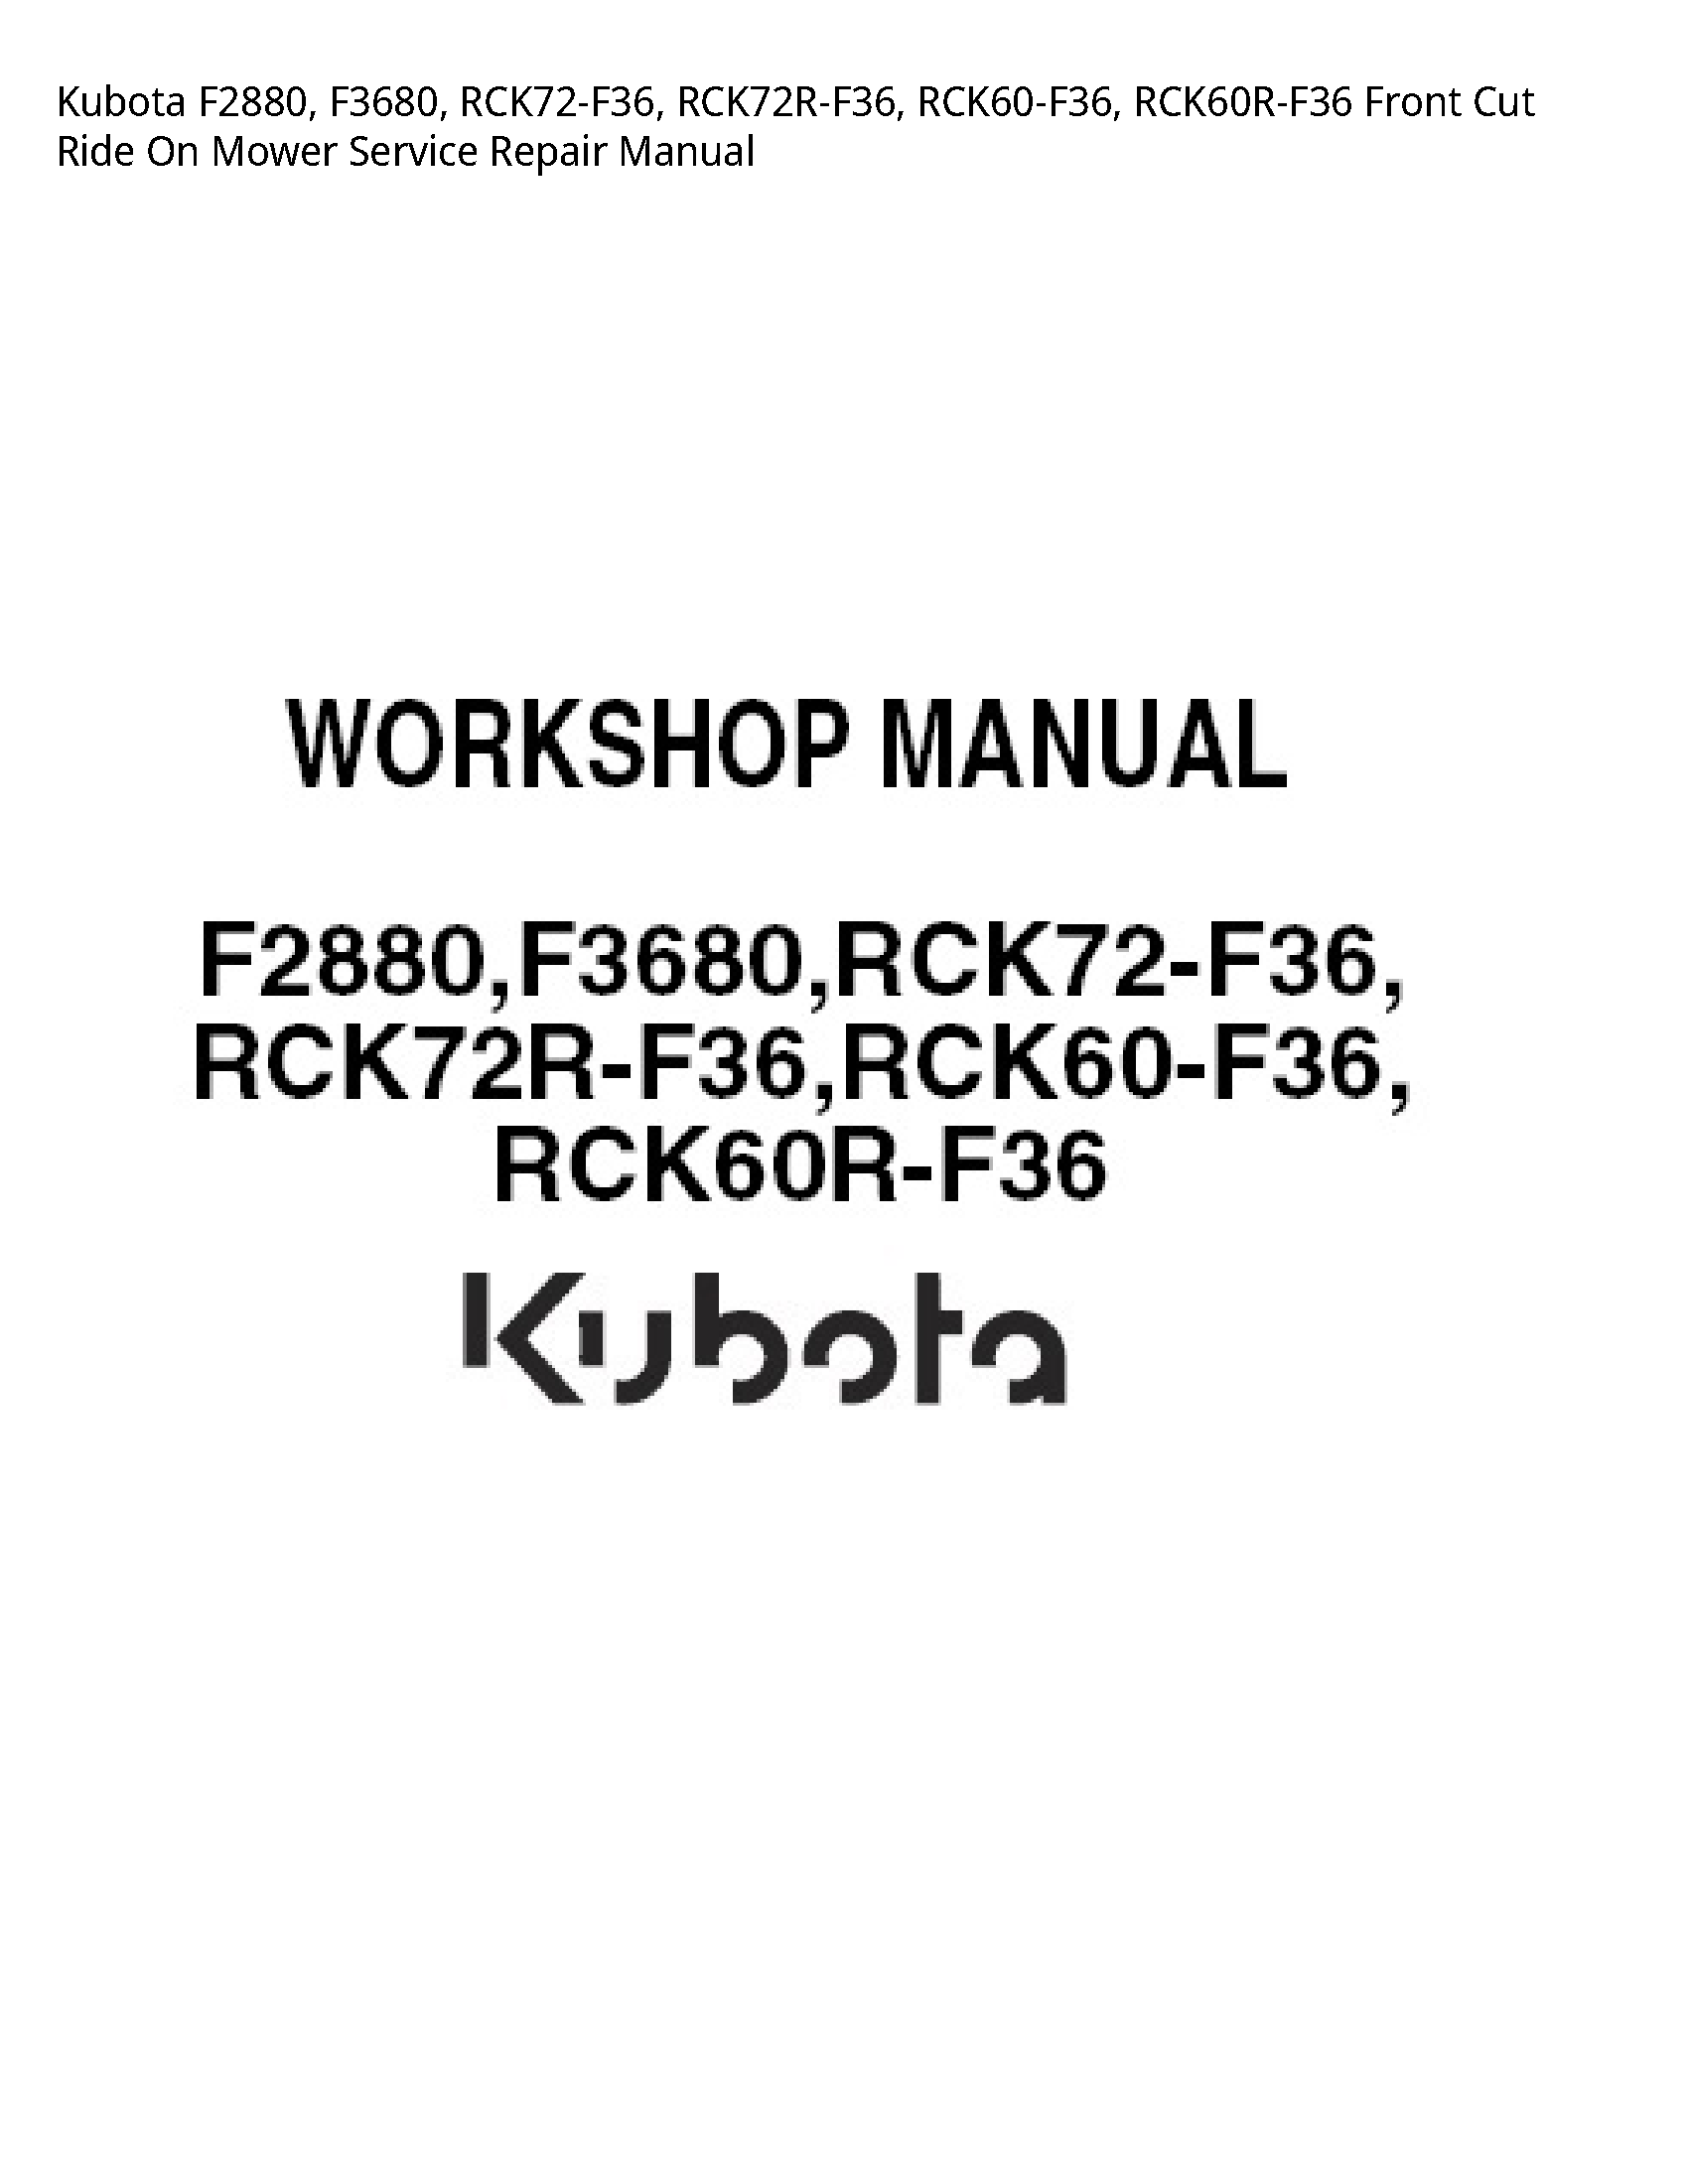 Kubota F2880 Front Cut Ride On Mower manual